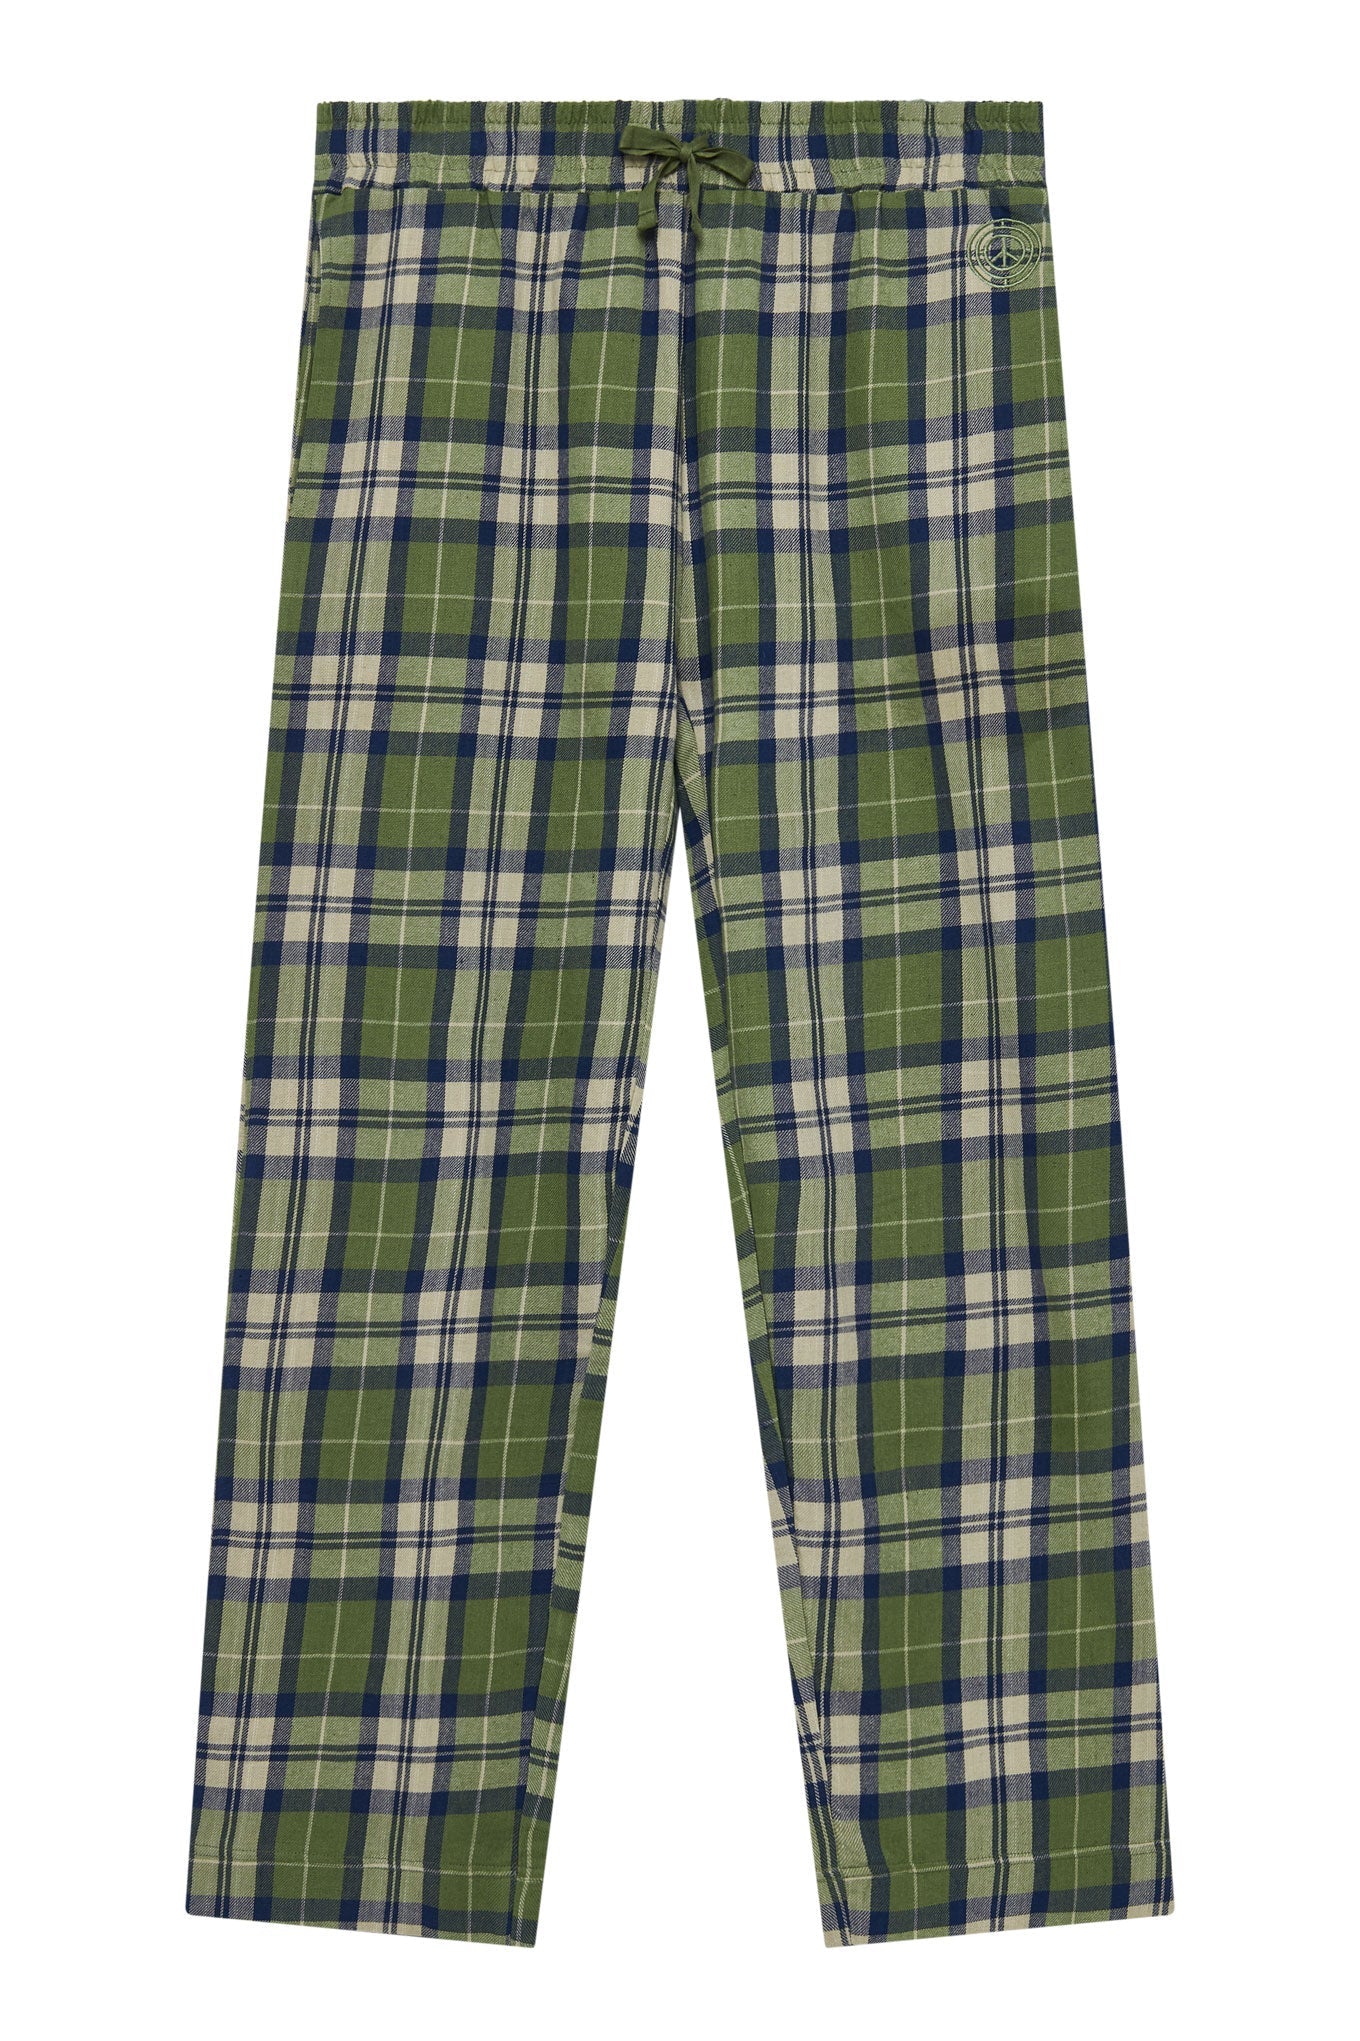 Grünes Pyjama-Set JIM JAM aus 100% Bio-Baumwolle von Komodo